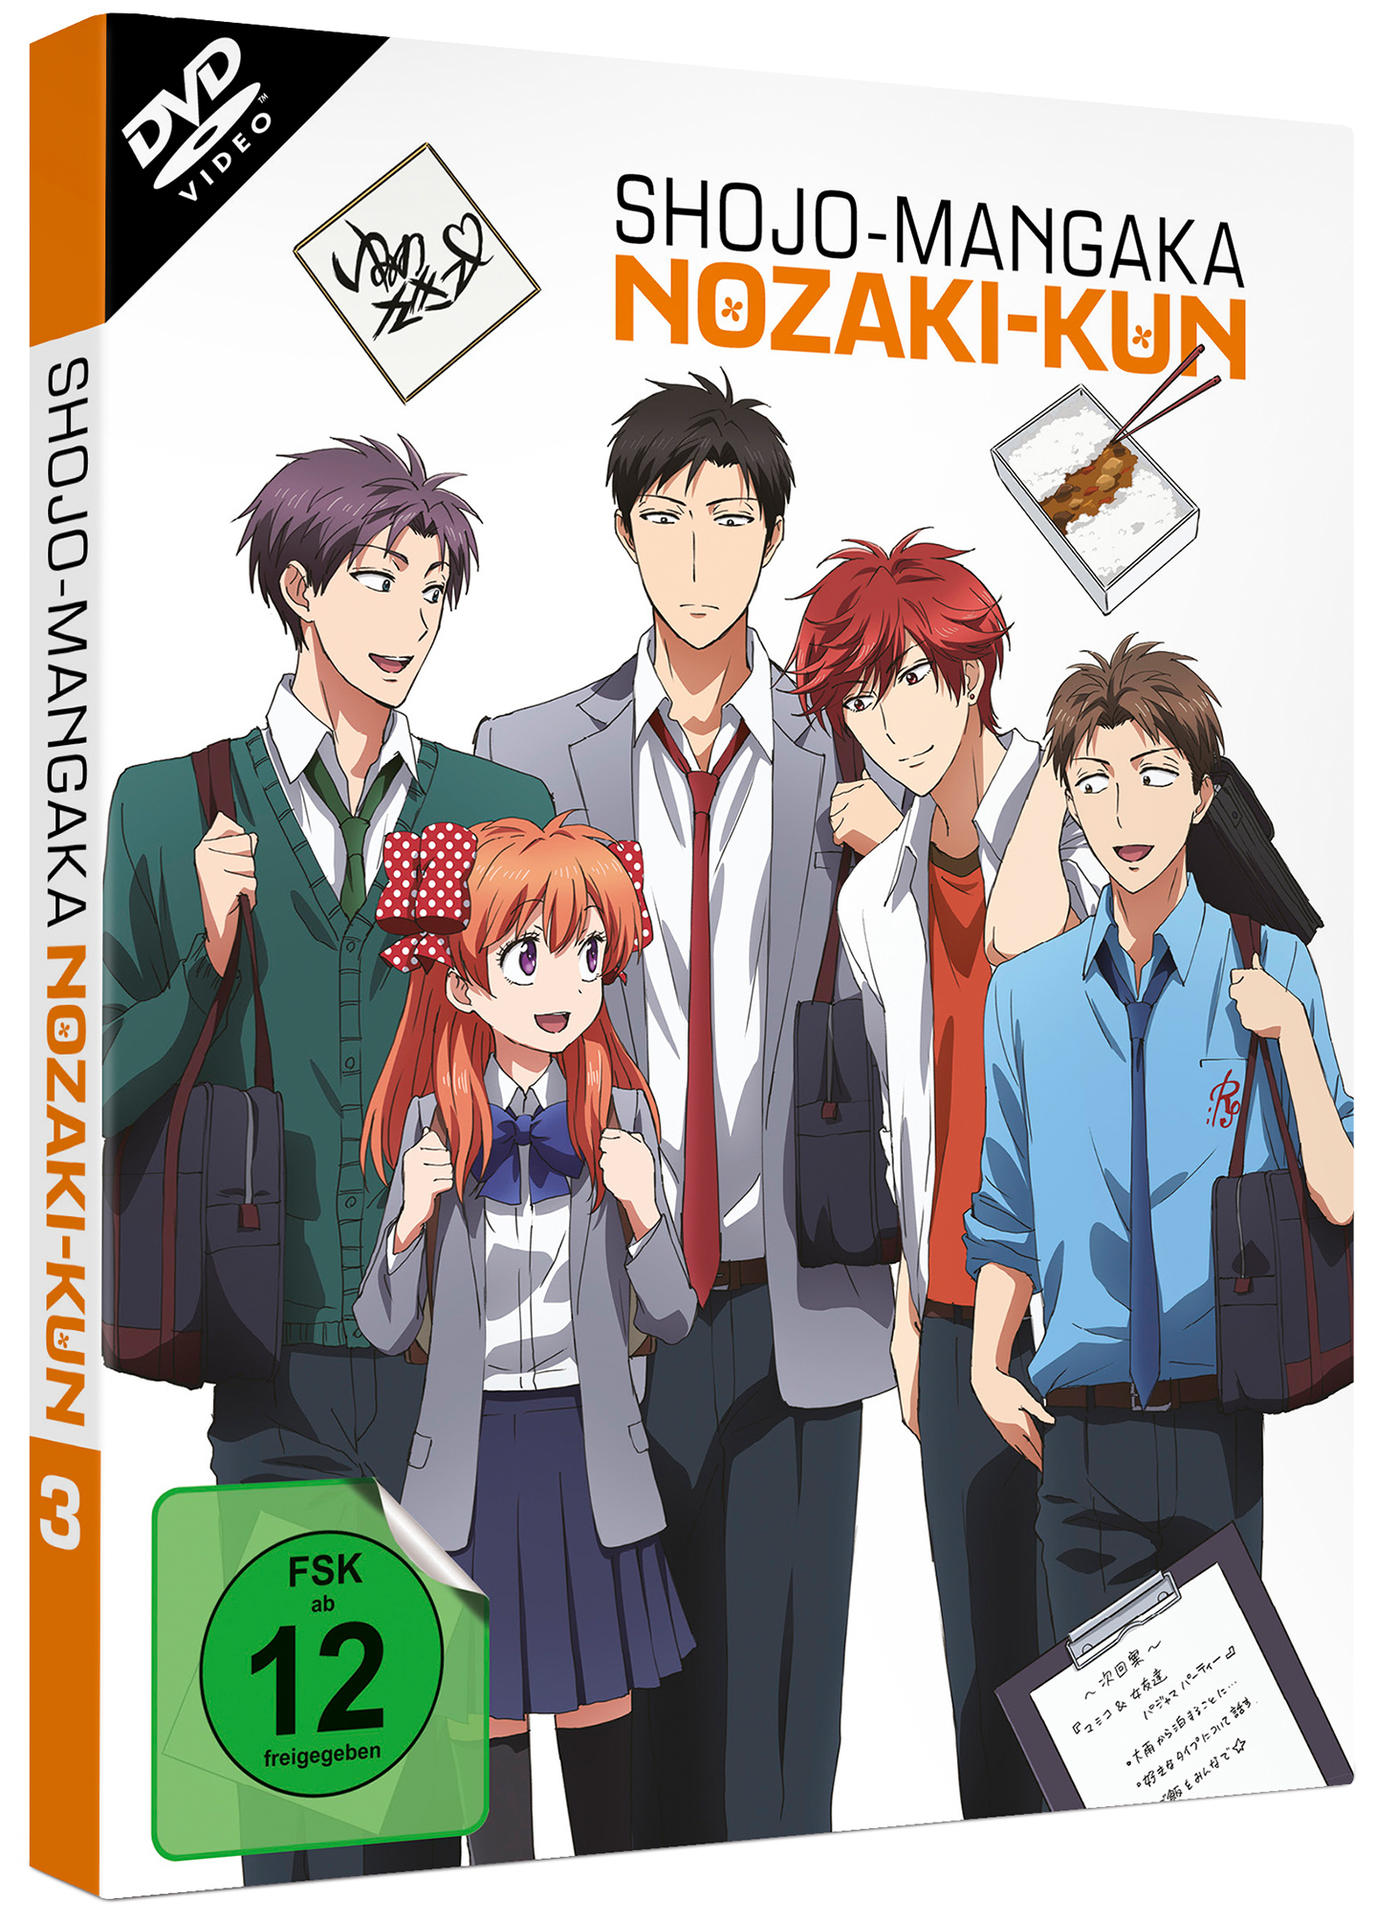 (Ep. Shojo-Mangaka Vol. 9-12) DVD Nozaki-Kun 3